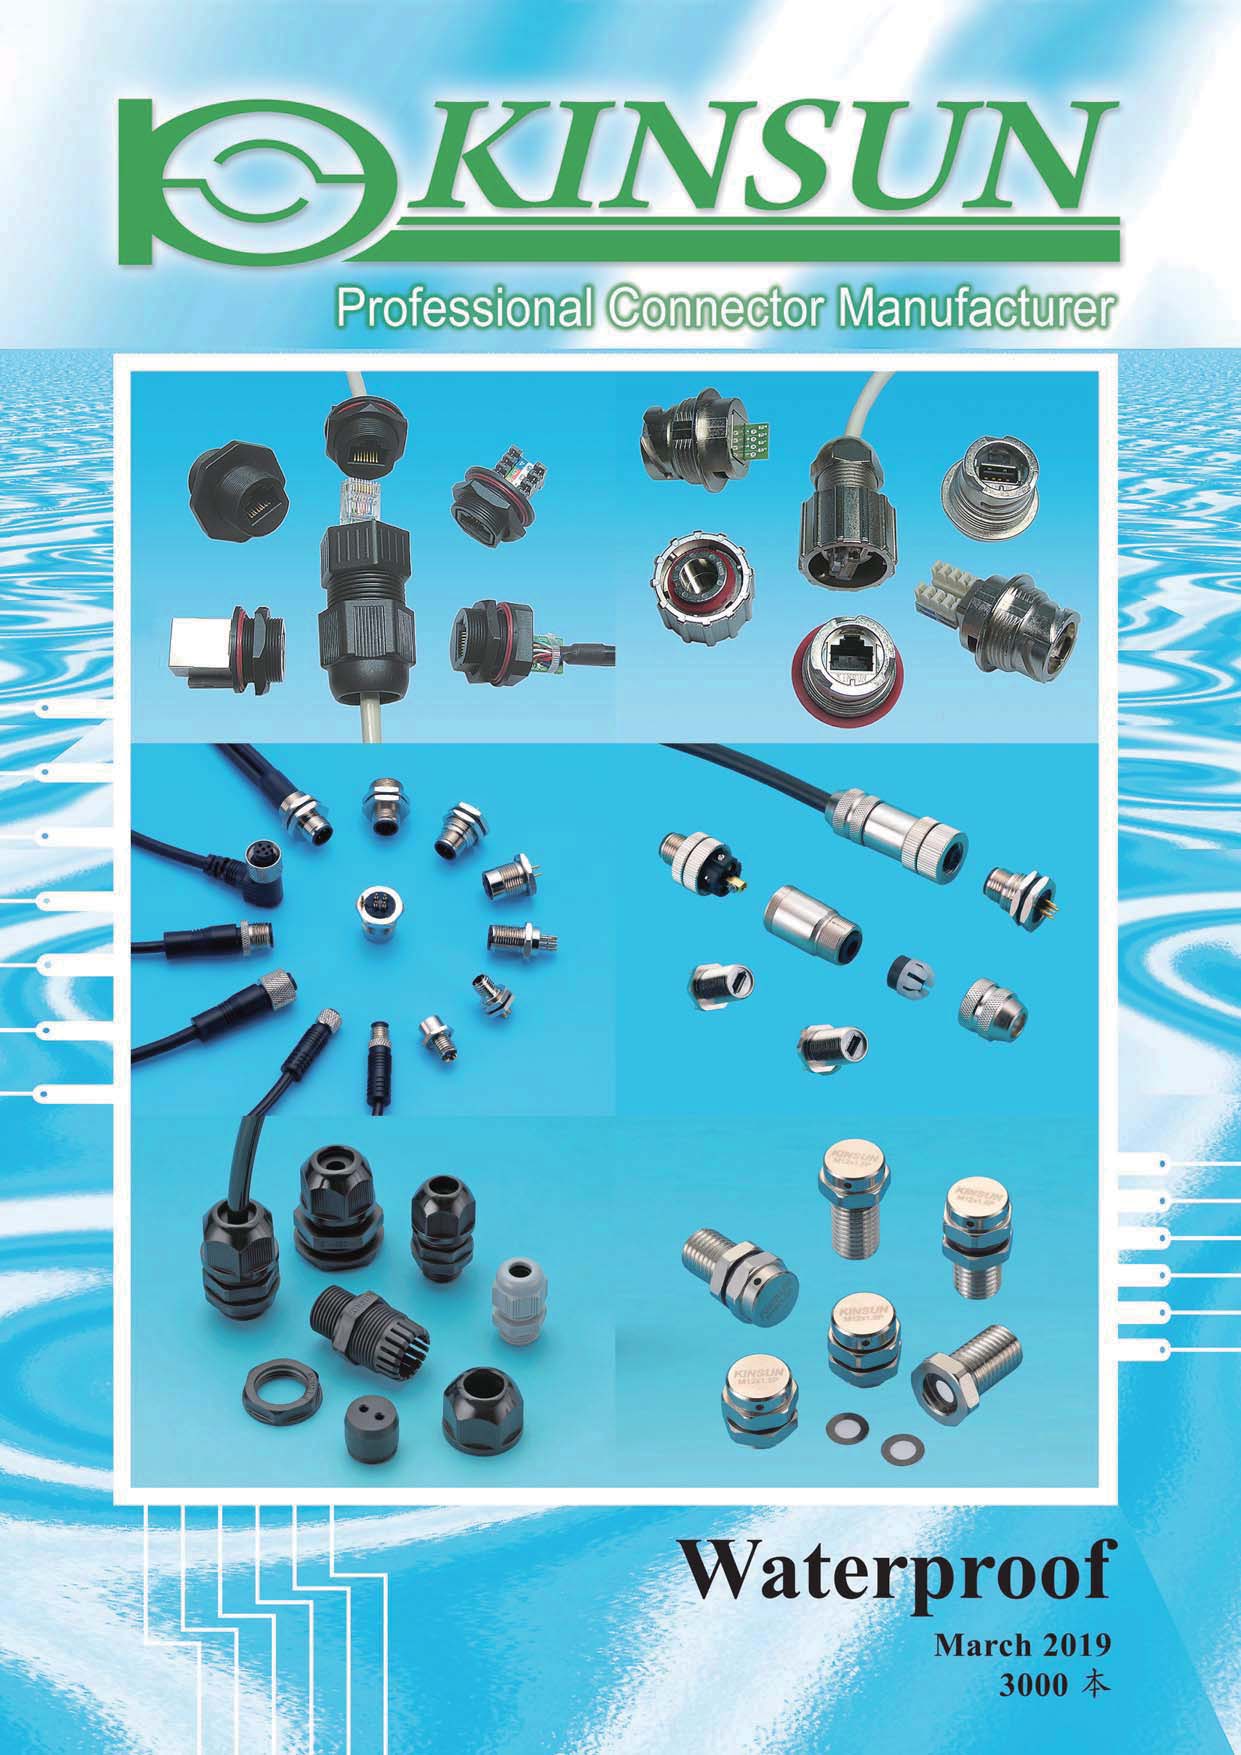 KINSUN waterproof connector catalog